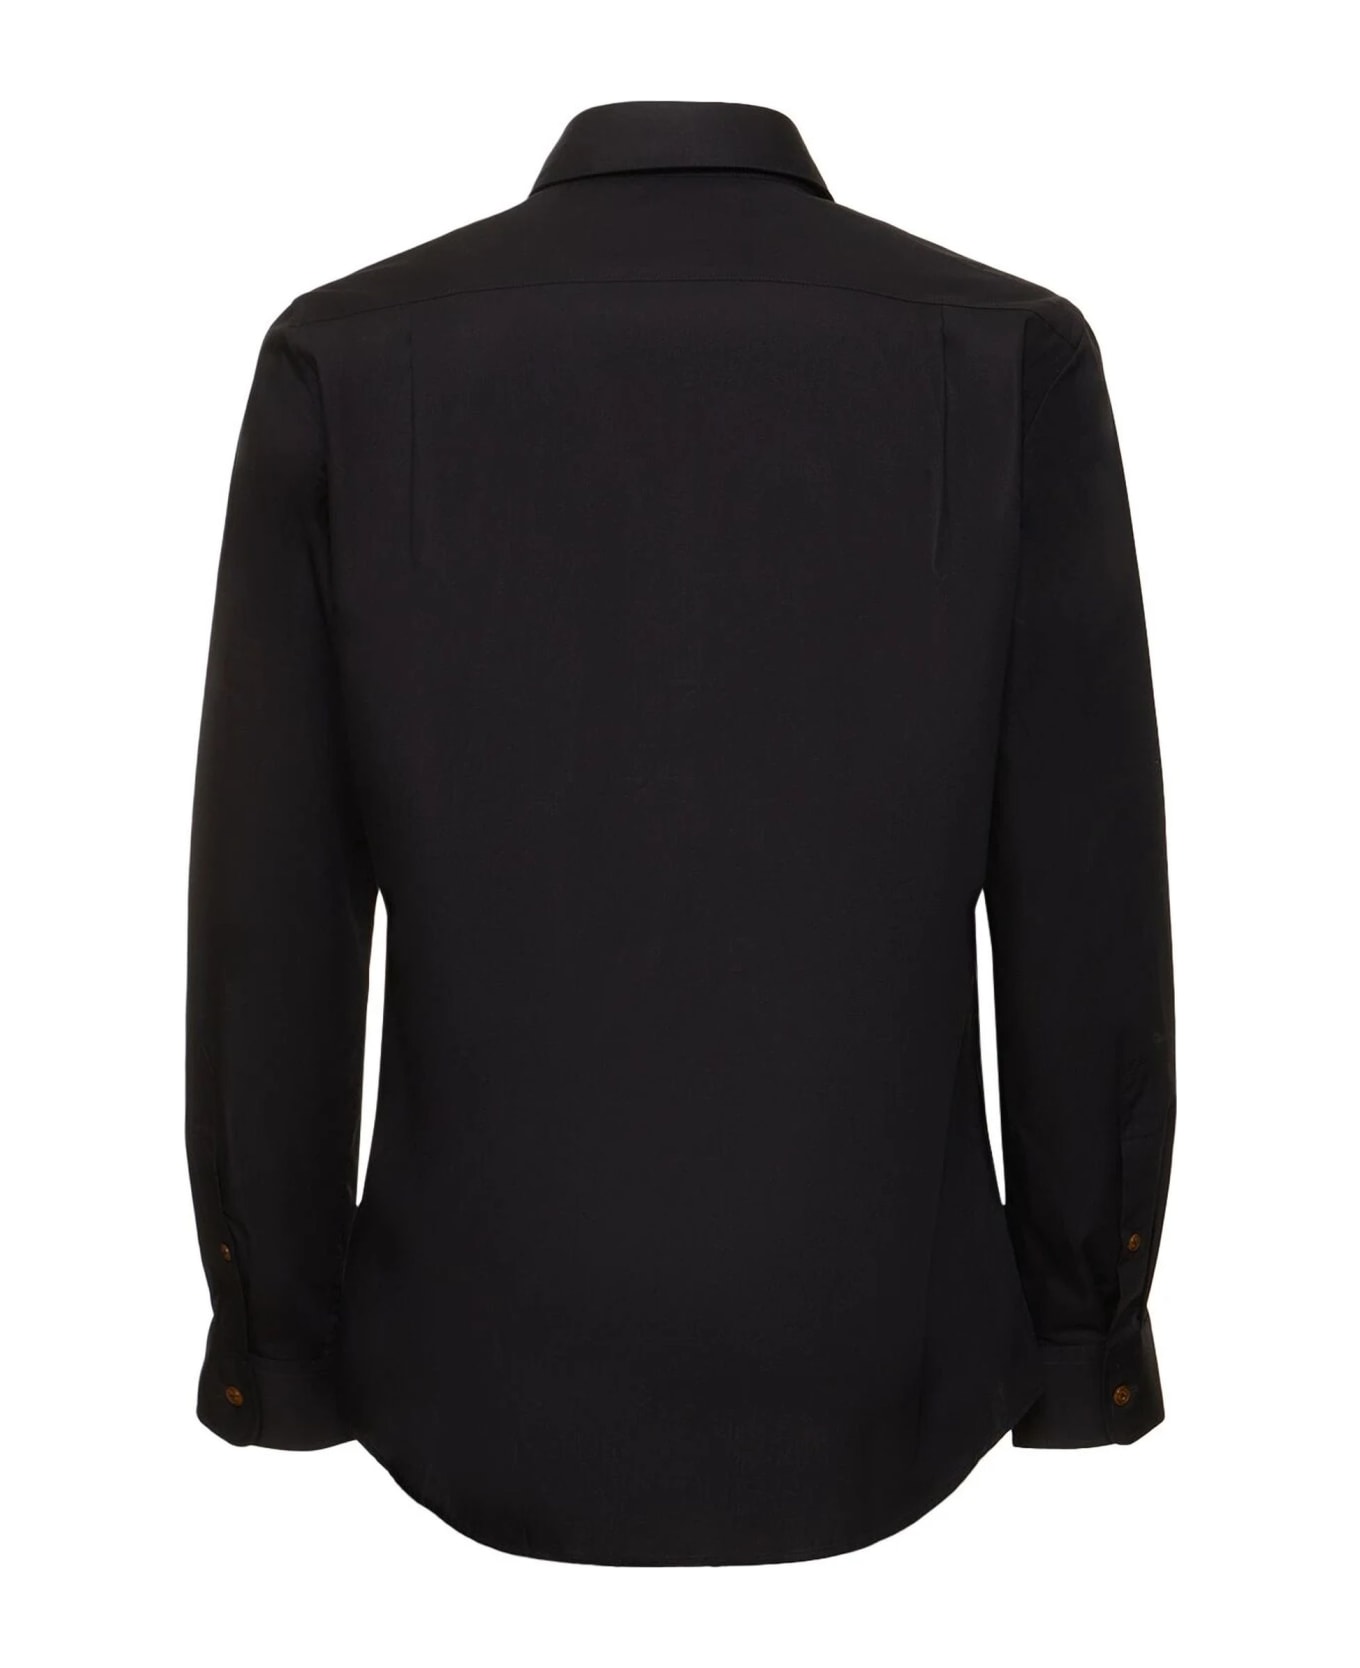 Vivienne Westwood Shirts Black - Black